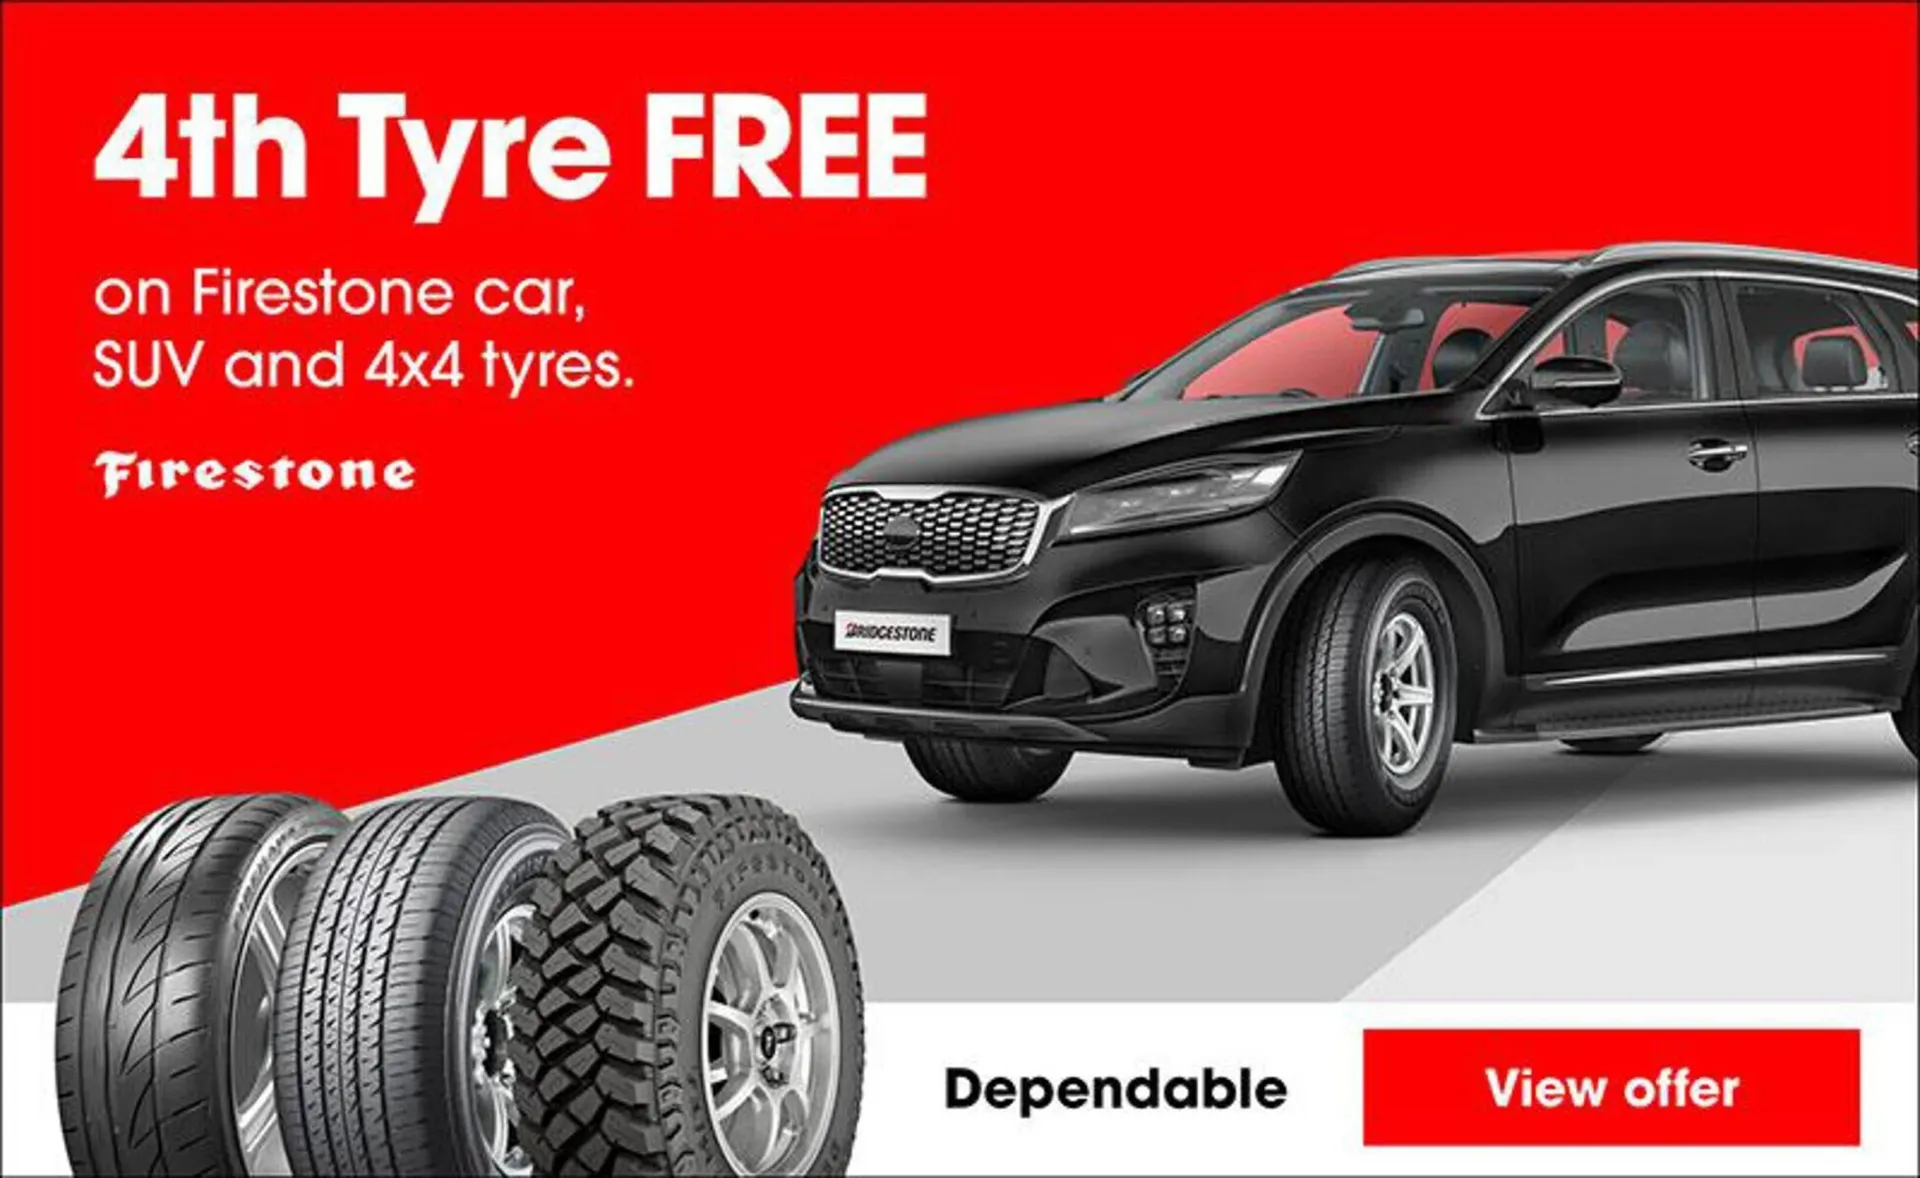 Bridgestone Tyres Catalogue - 1